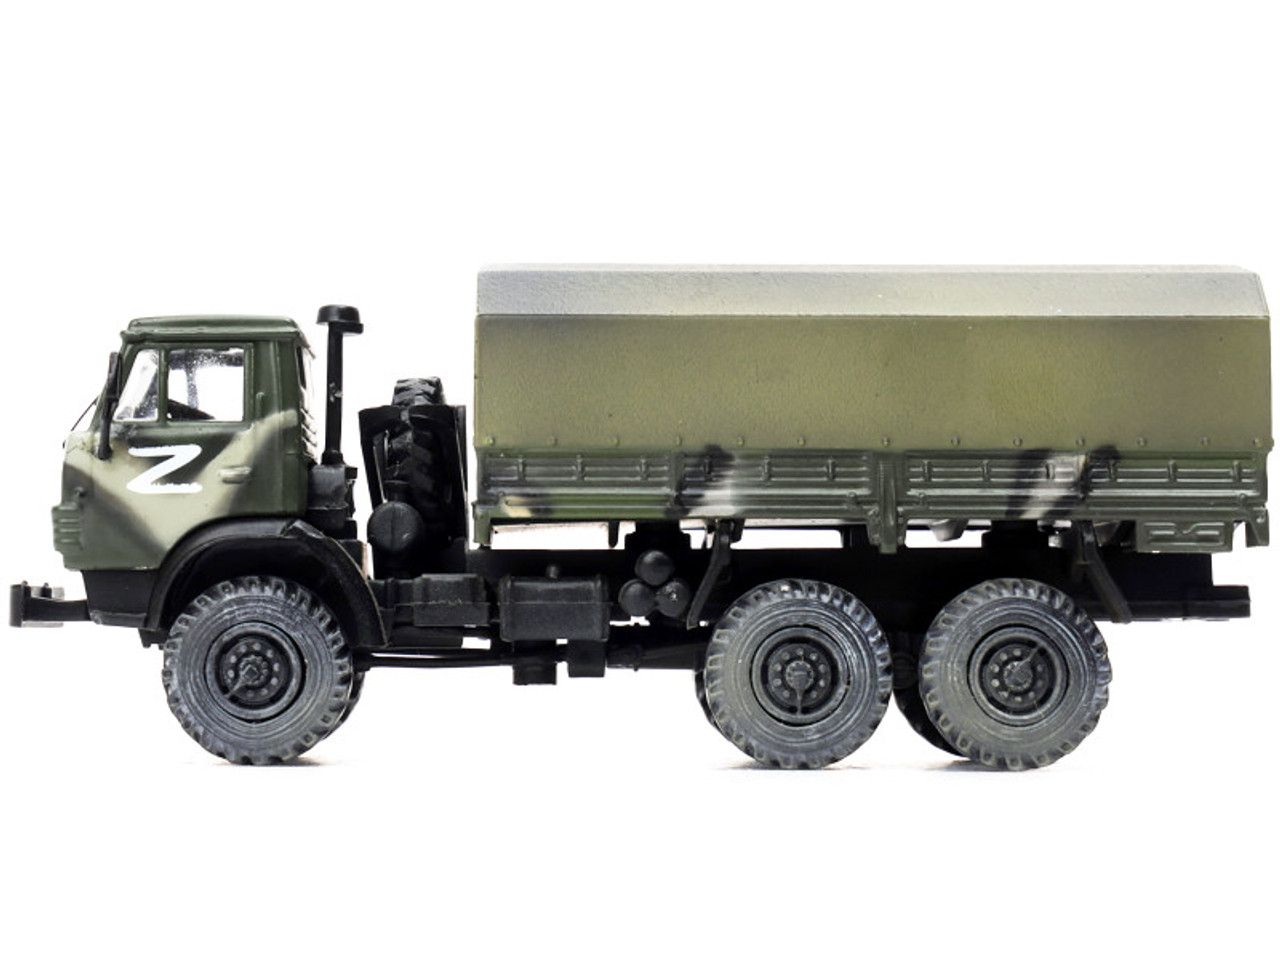 Kamaz 4310 Transport Truck Green Camouflage (Weathered) "Z- Russian Separatist Militia" 1/72 Diecast Model by Legion